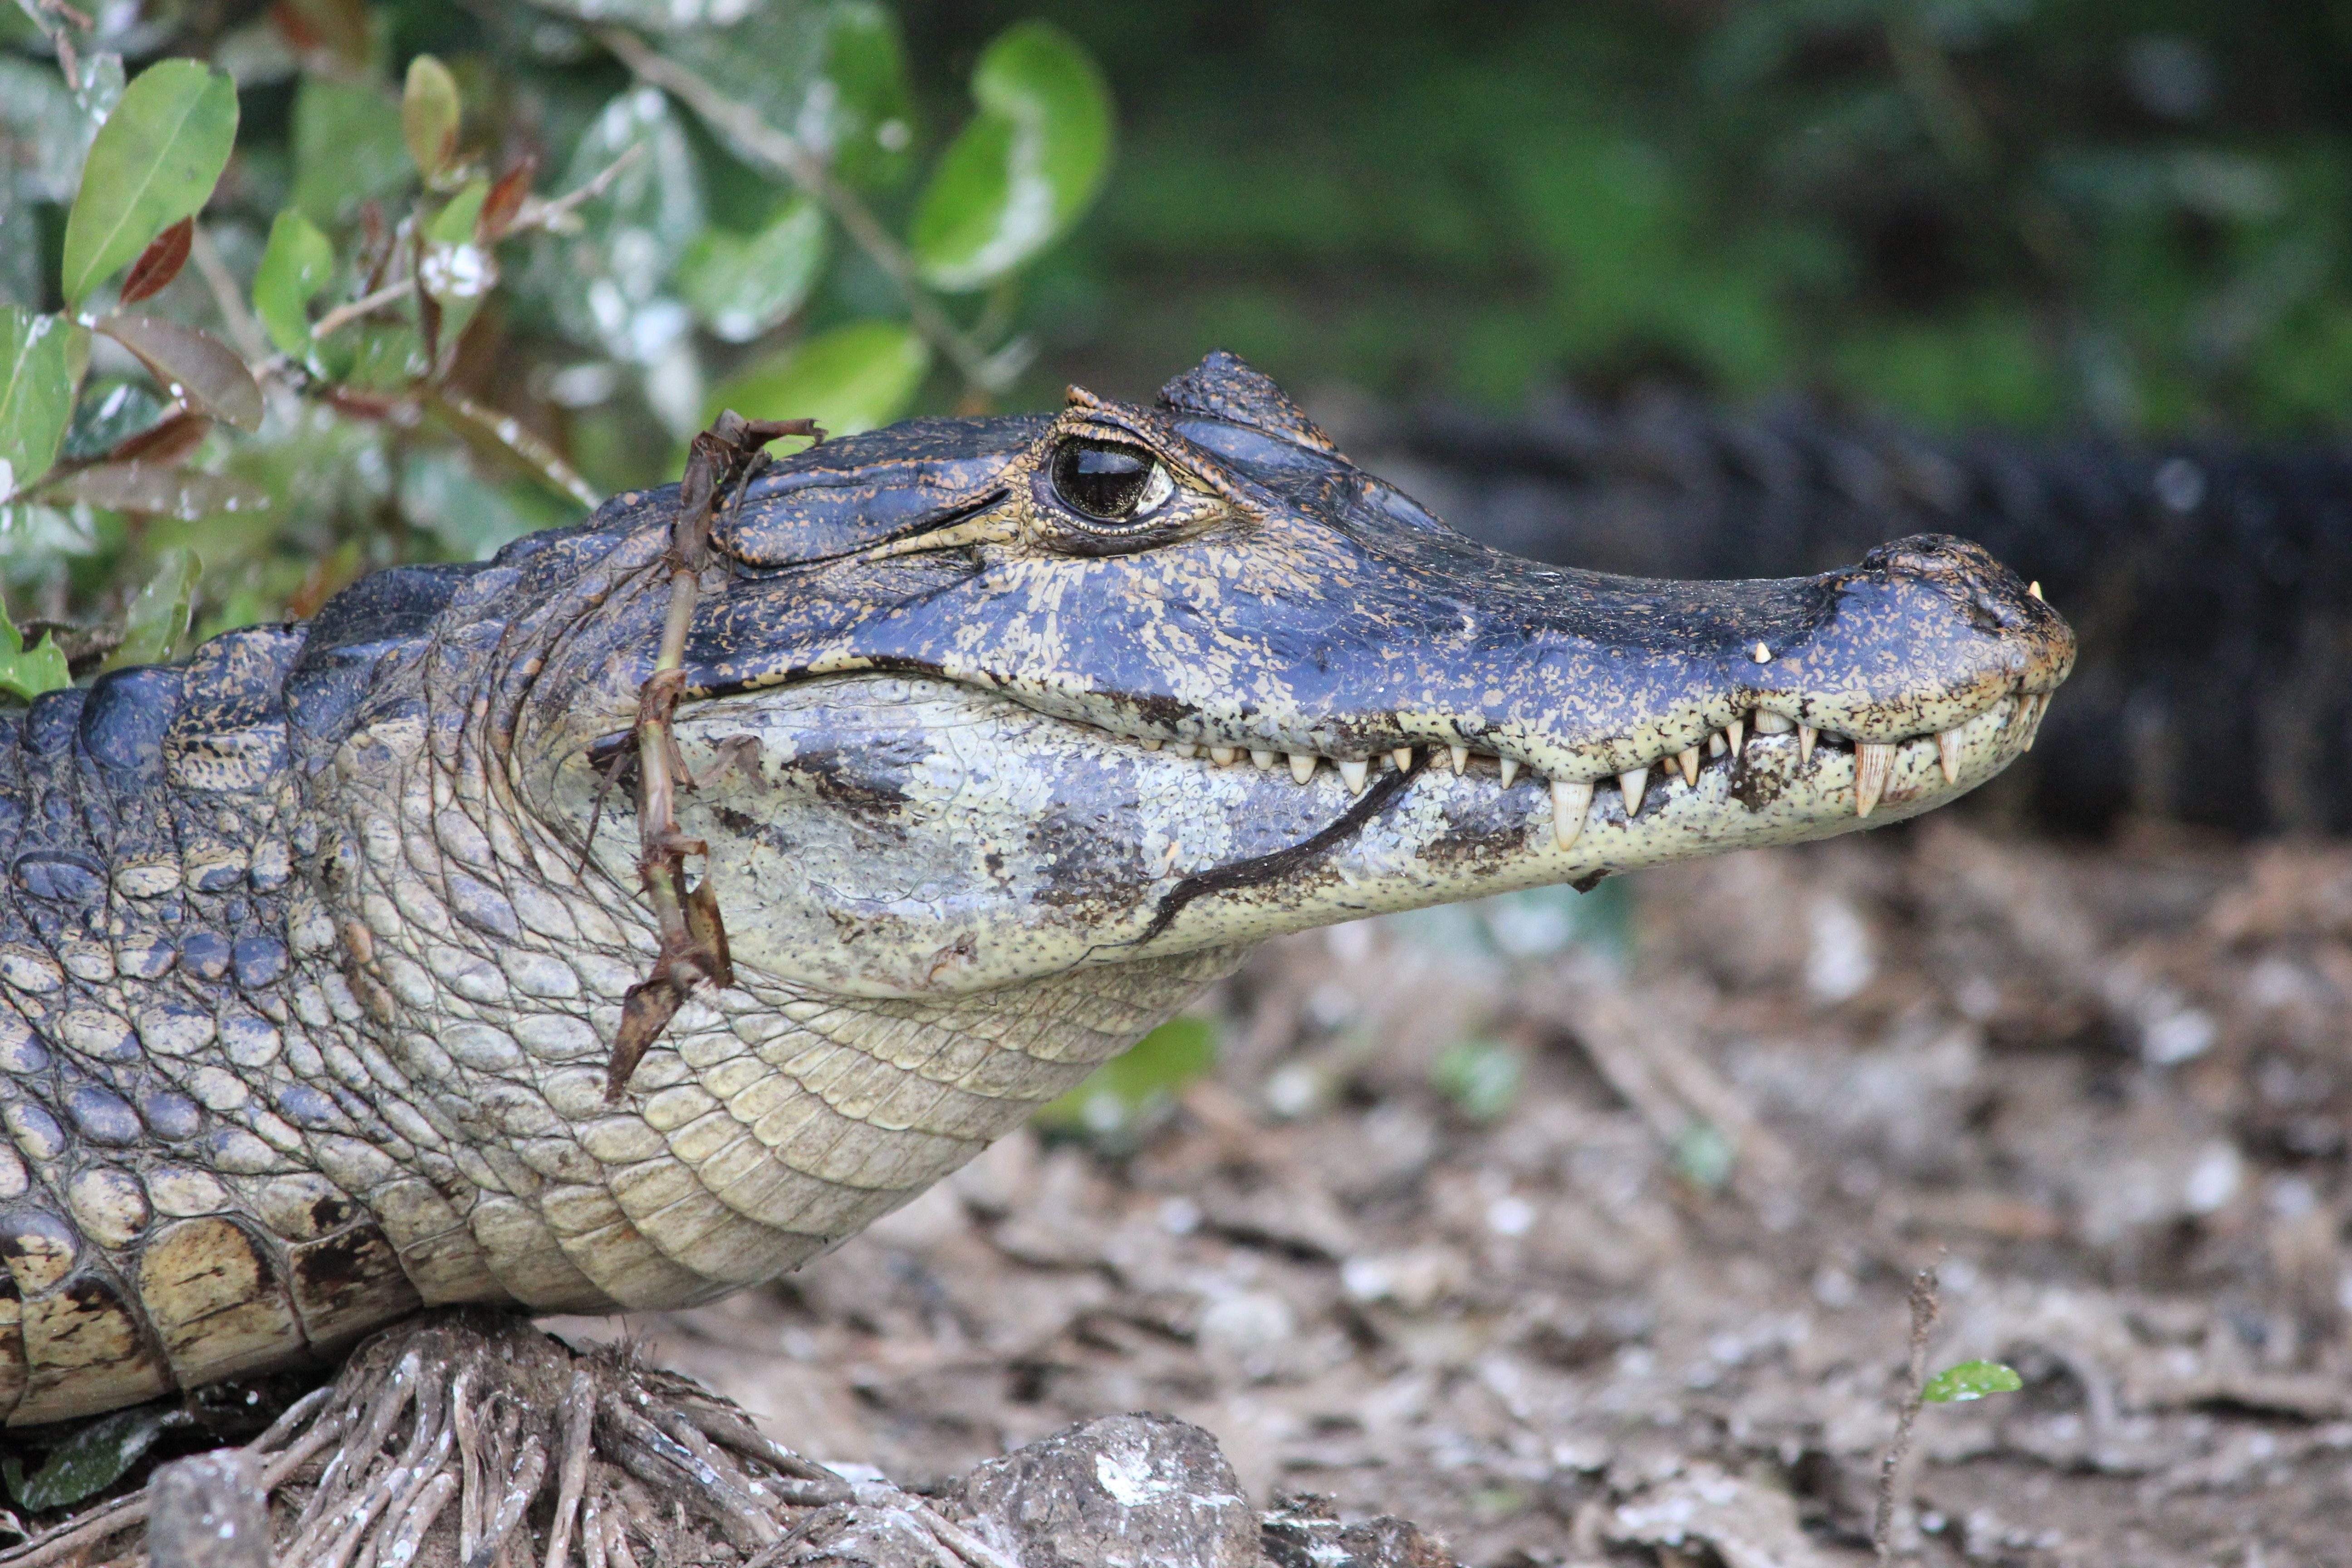 A crocodile in Pantanal Matogrossense National Park in Brazil